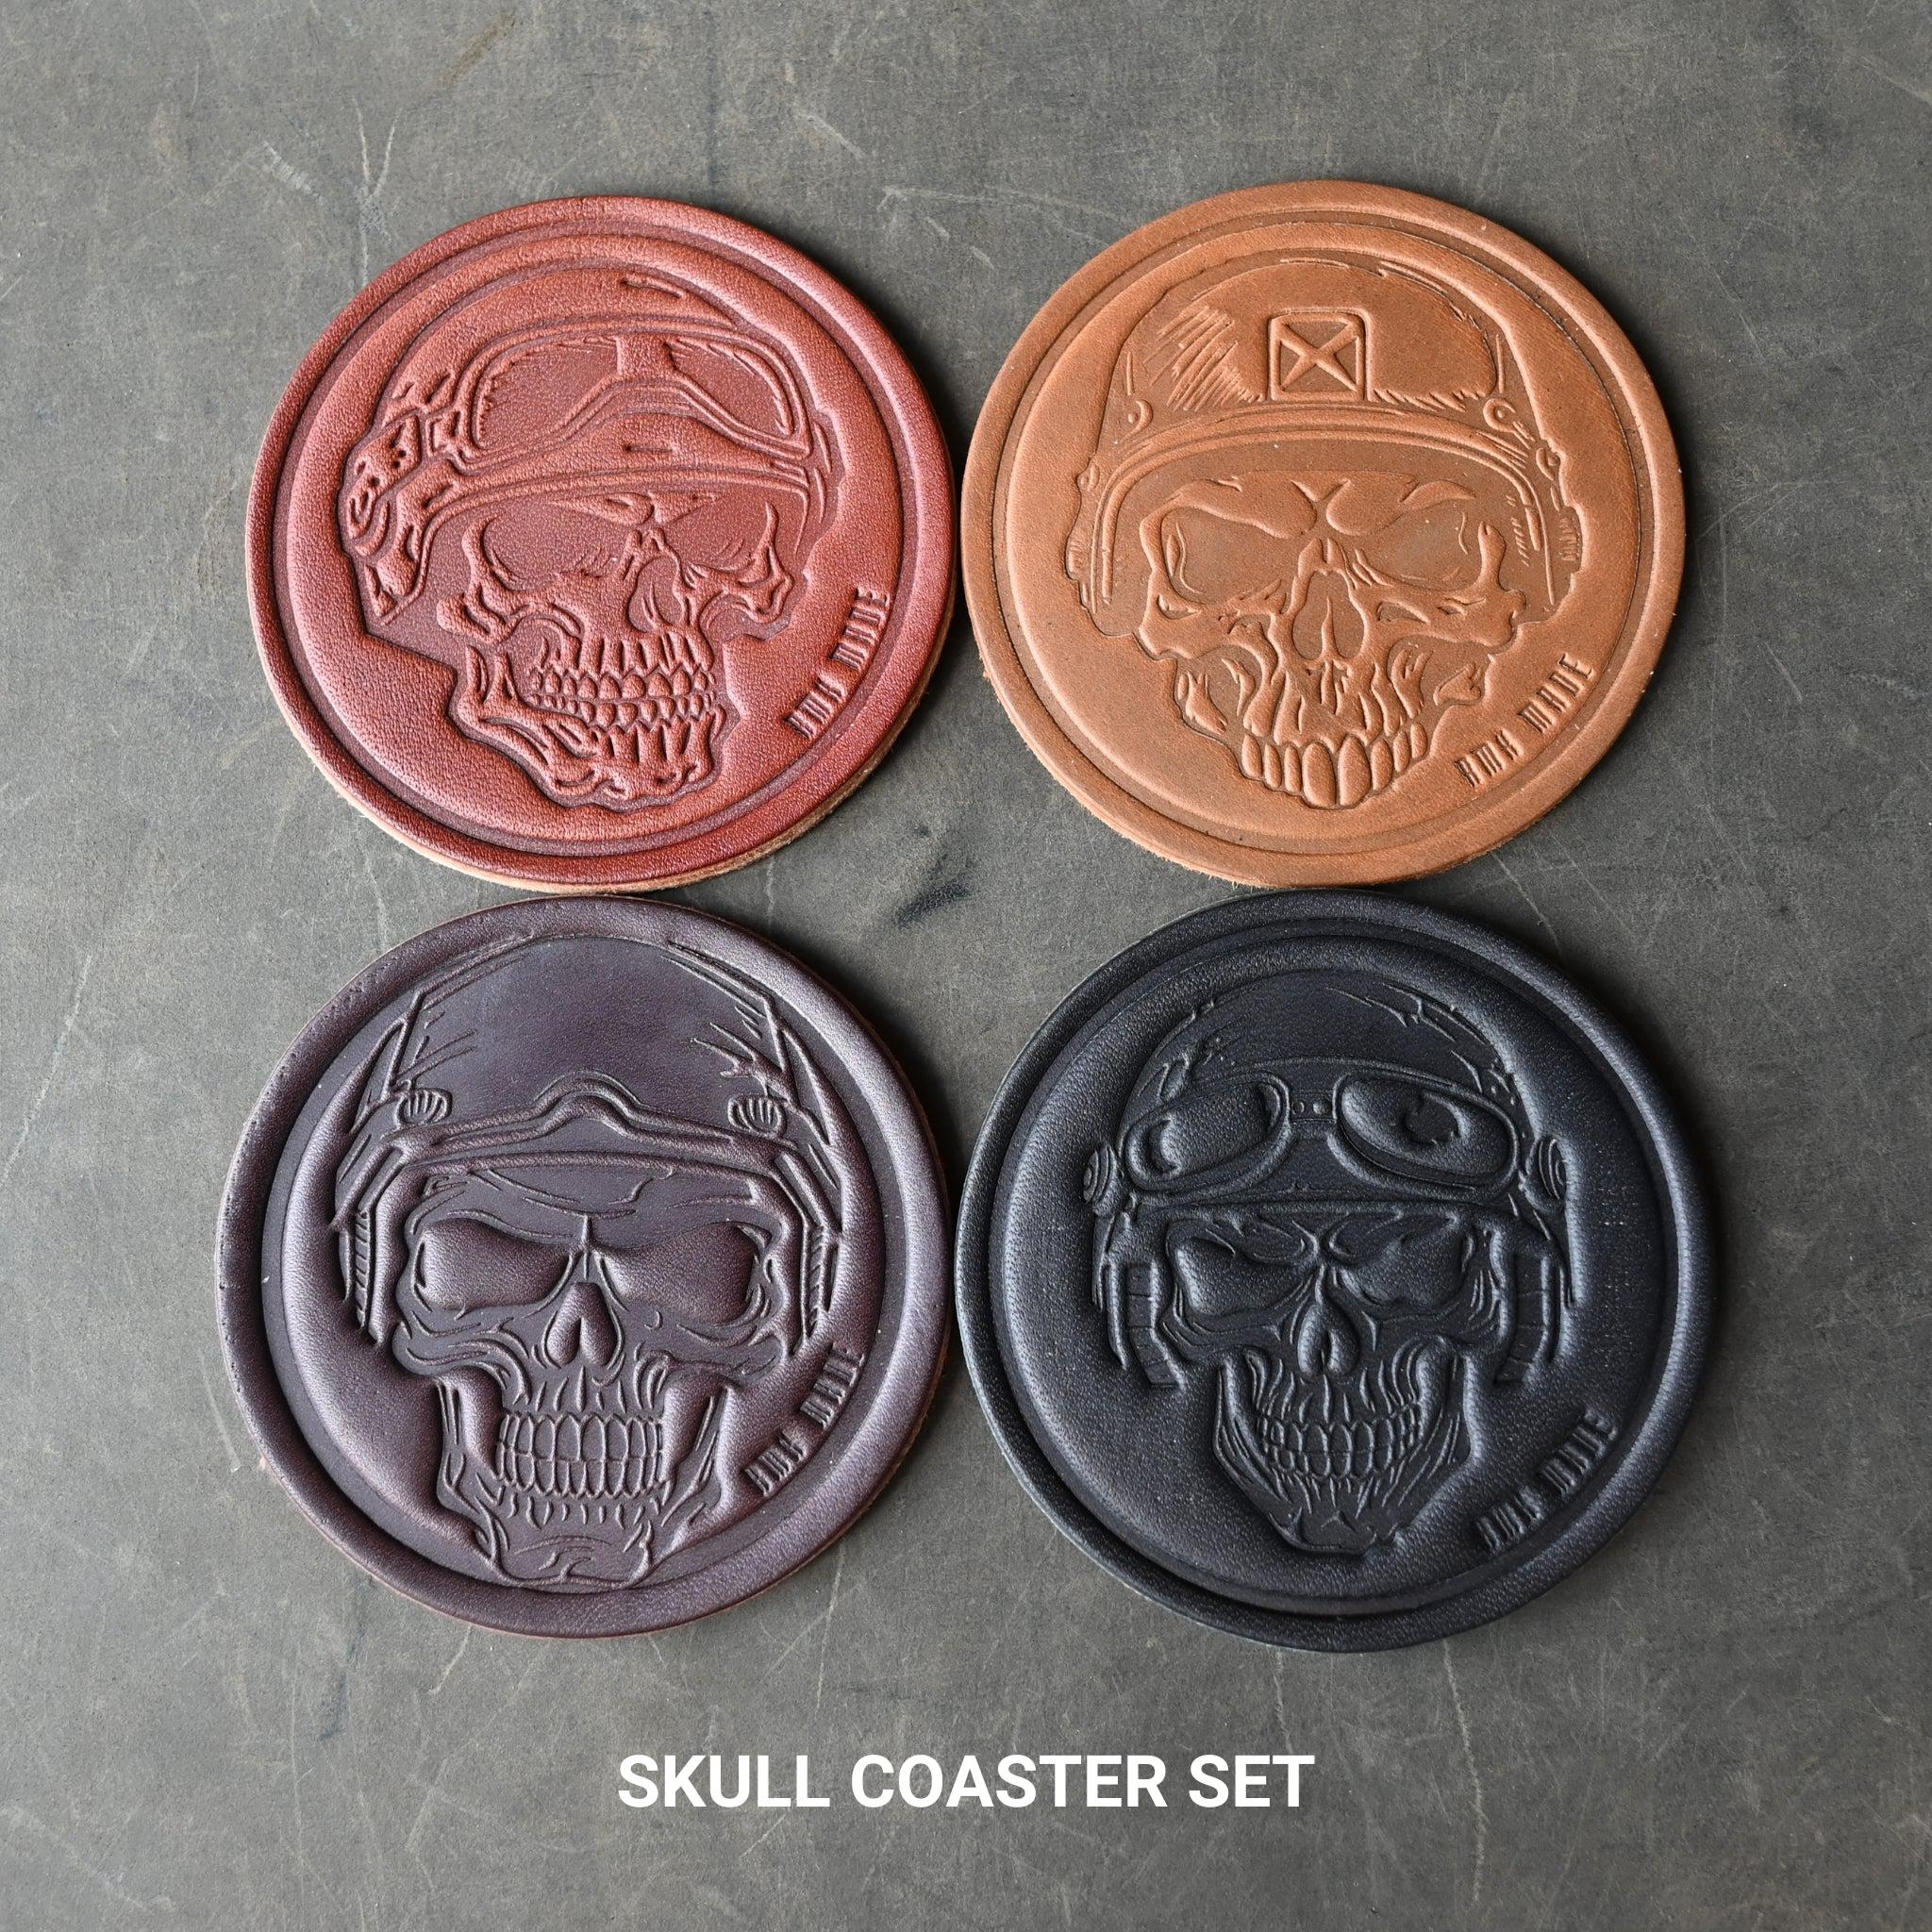 RMK Leather Coasters